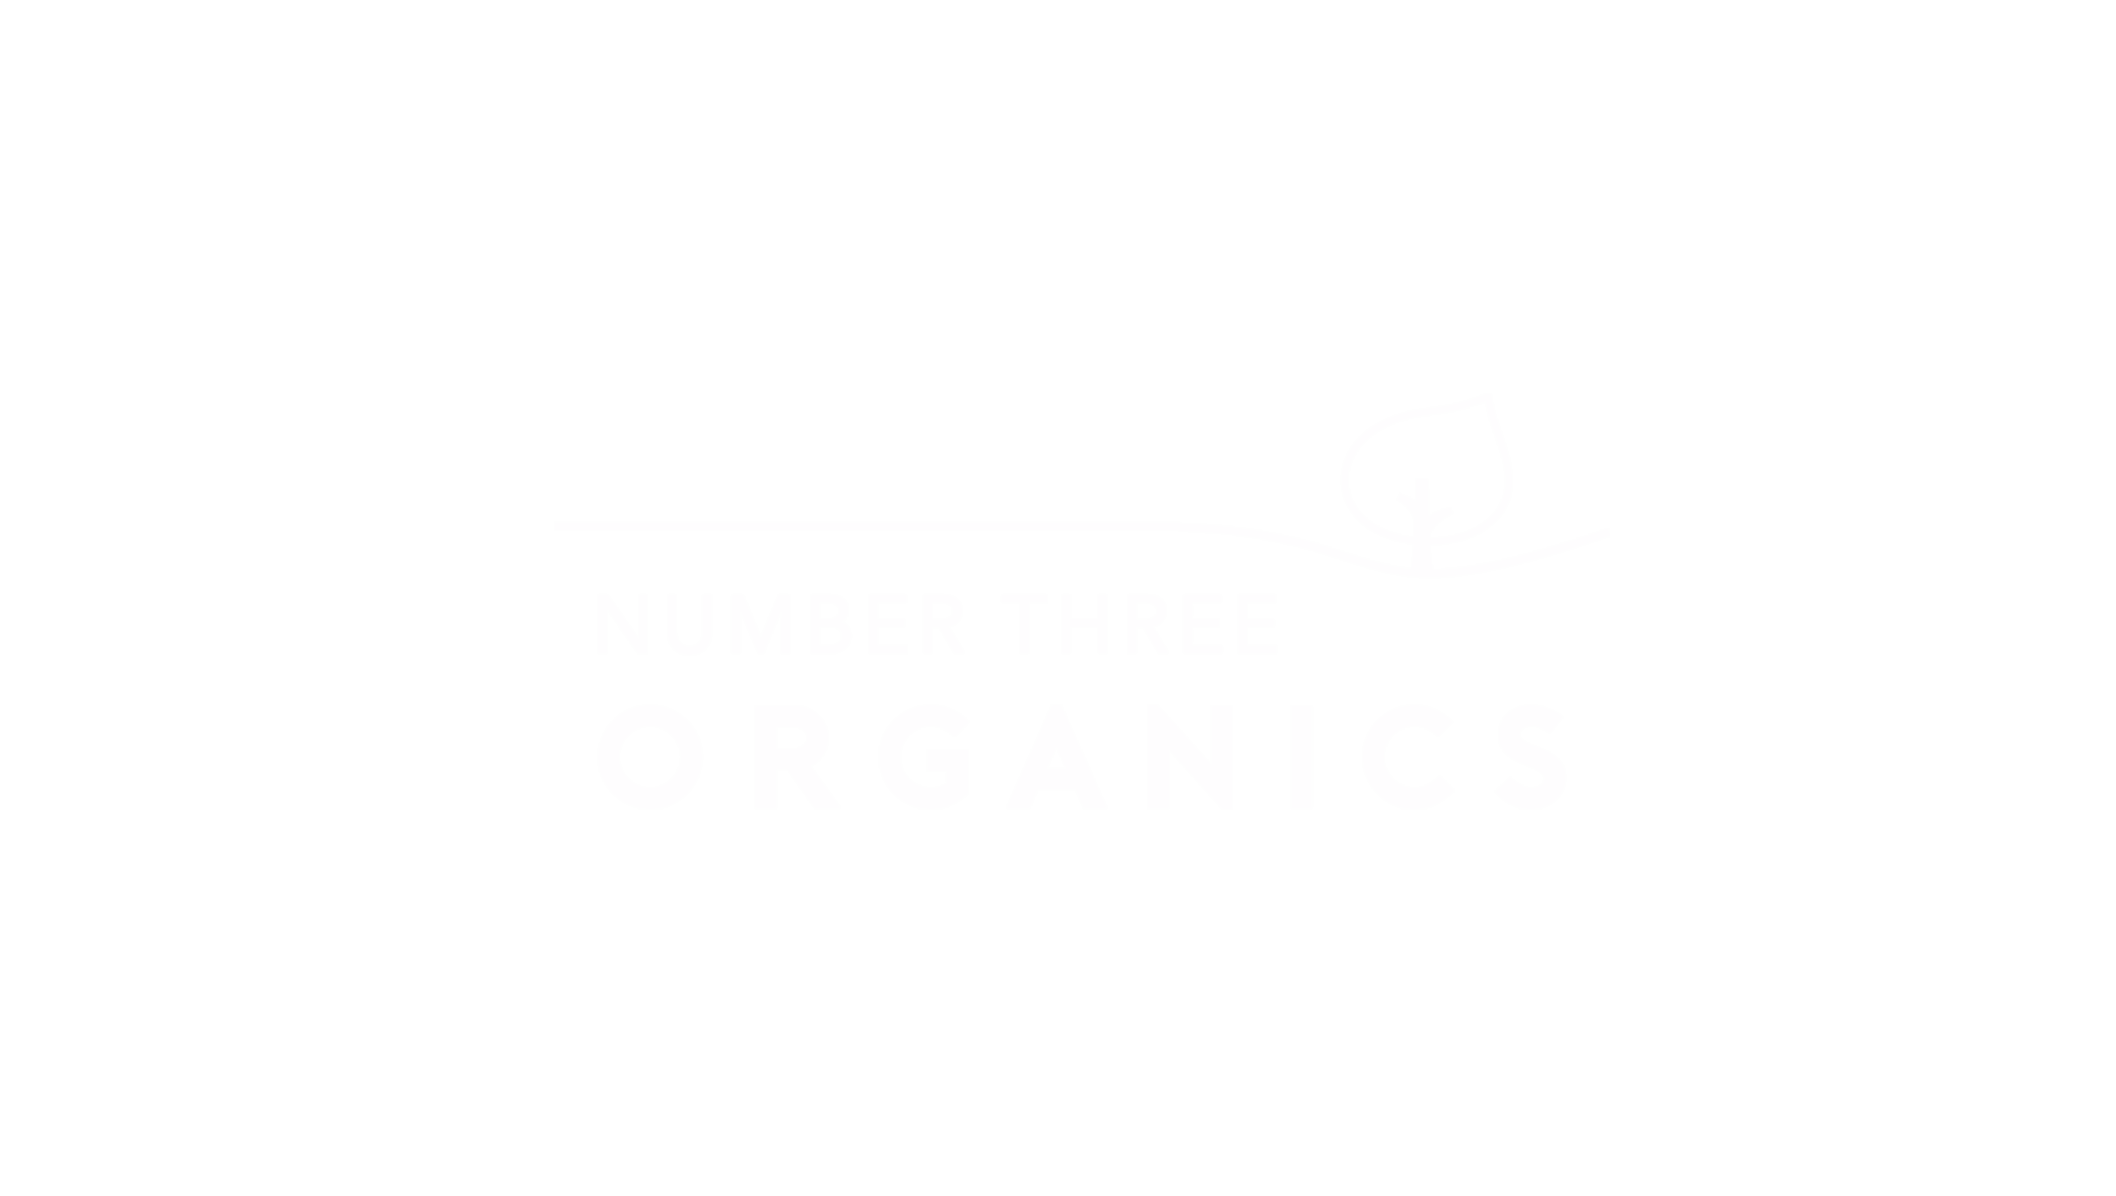 NUMBER THREE ORGANICS